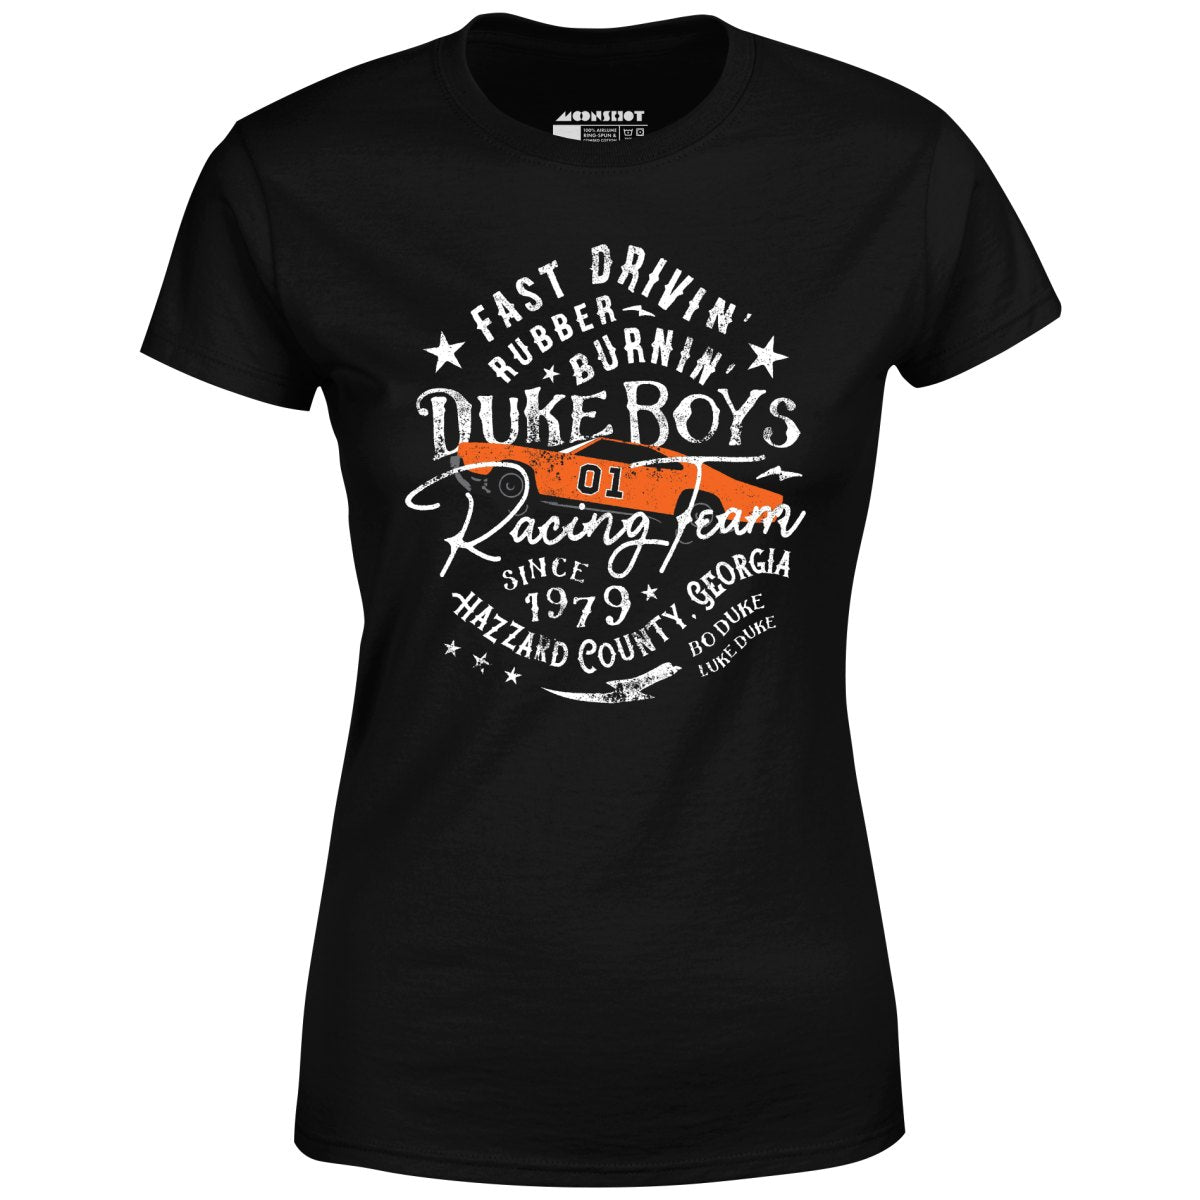 Duke Boys Racing Team - Women's T-Shirt